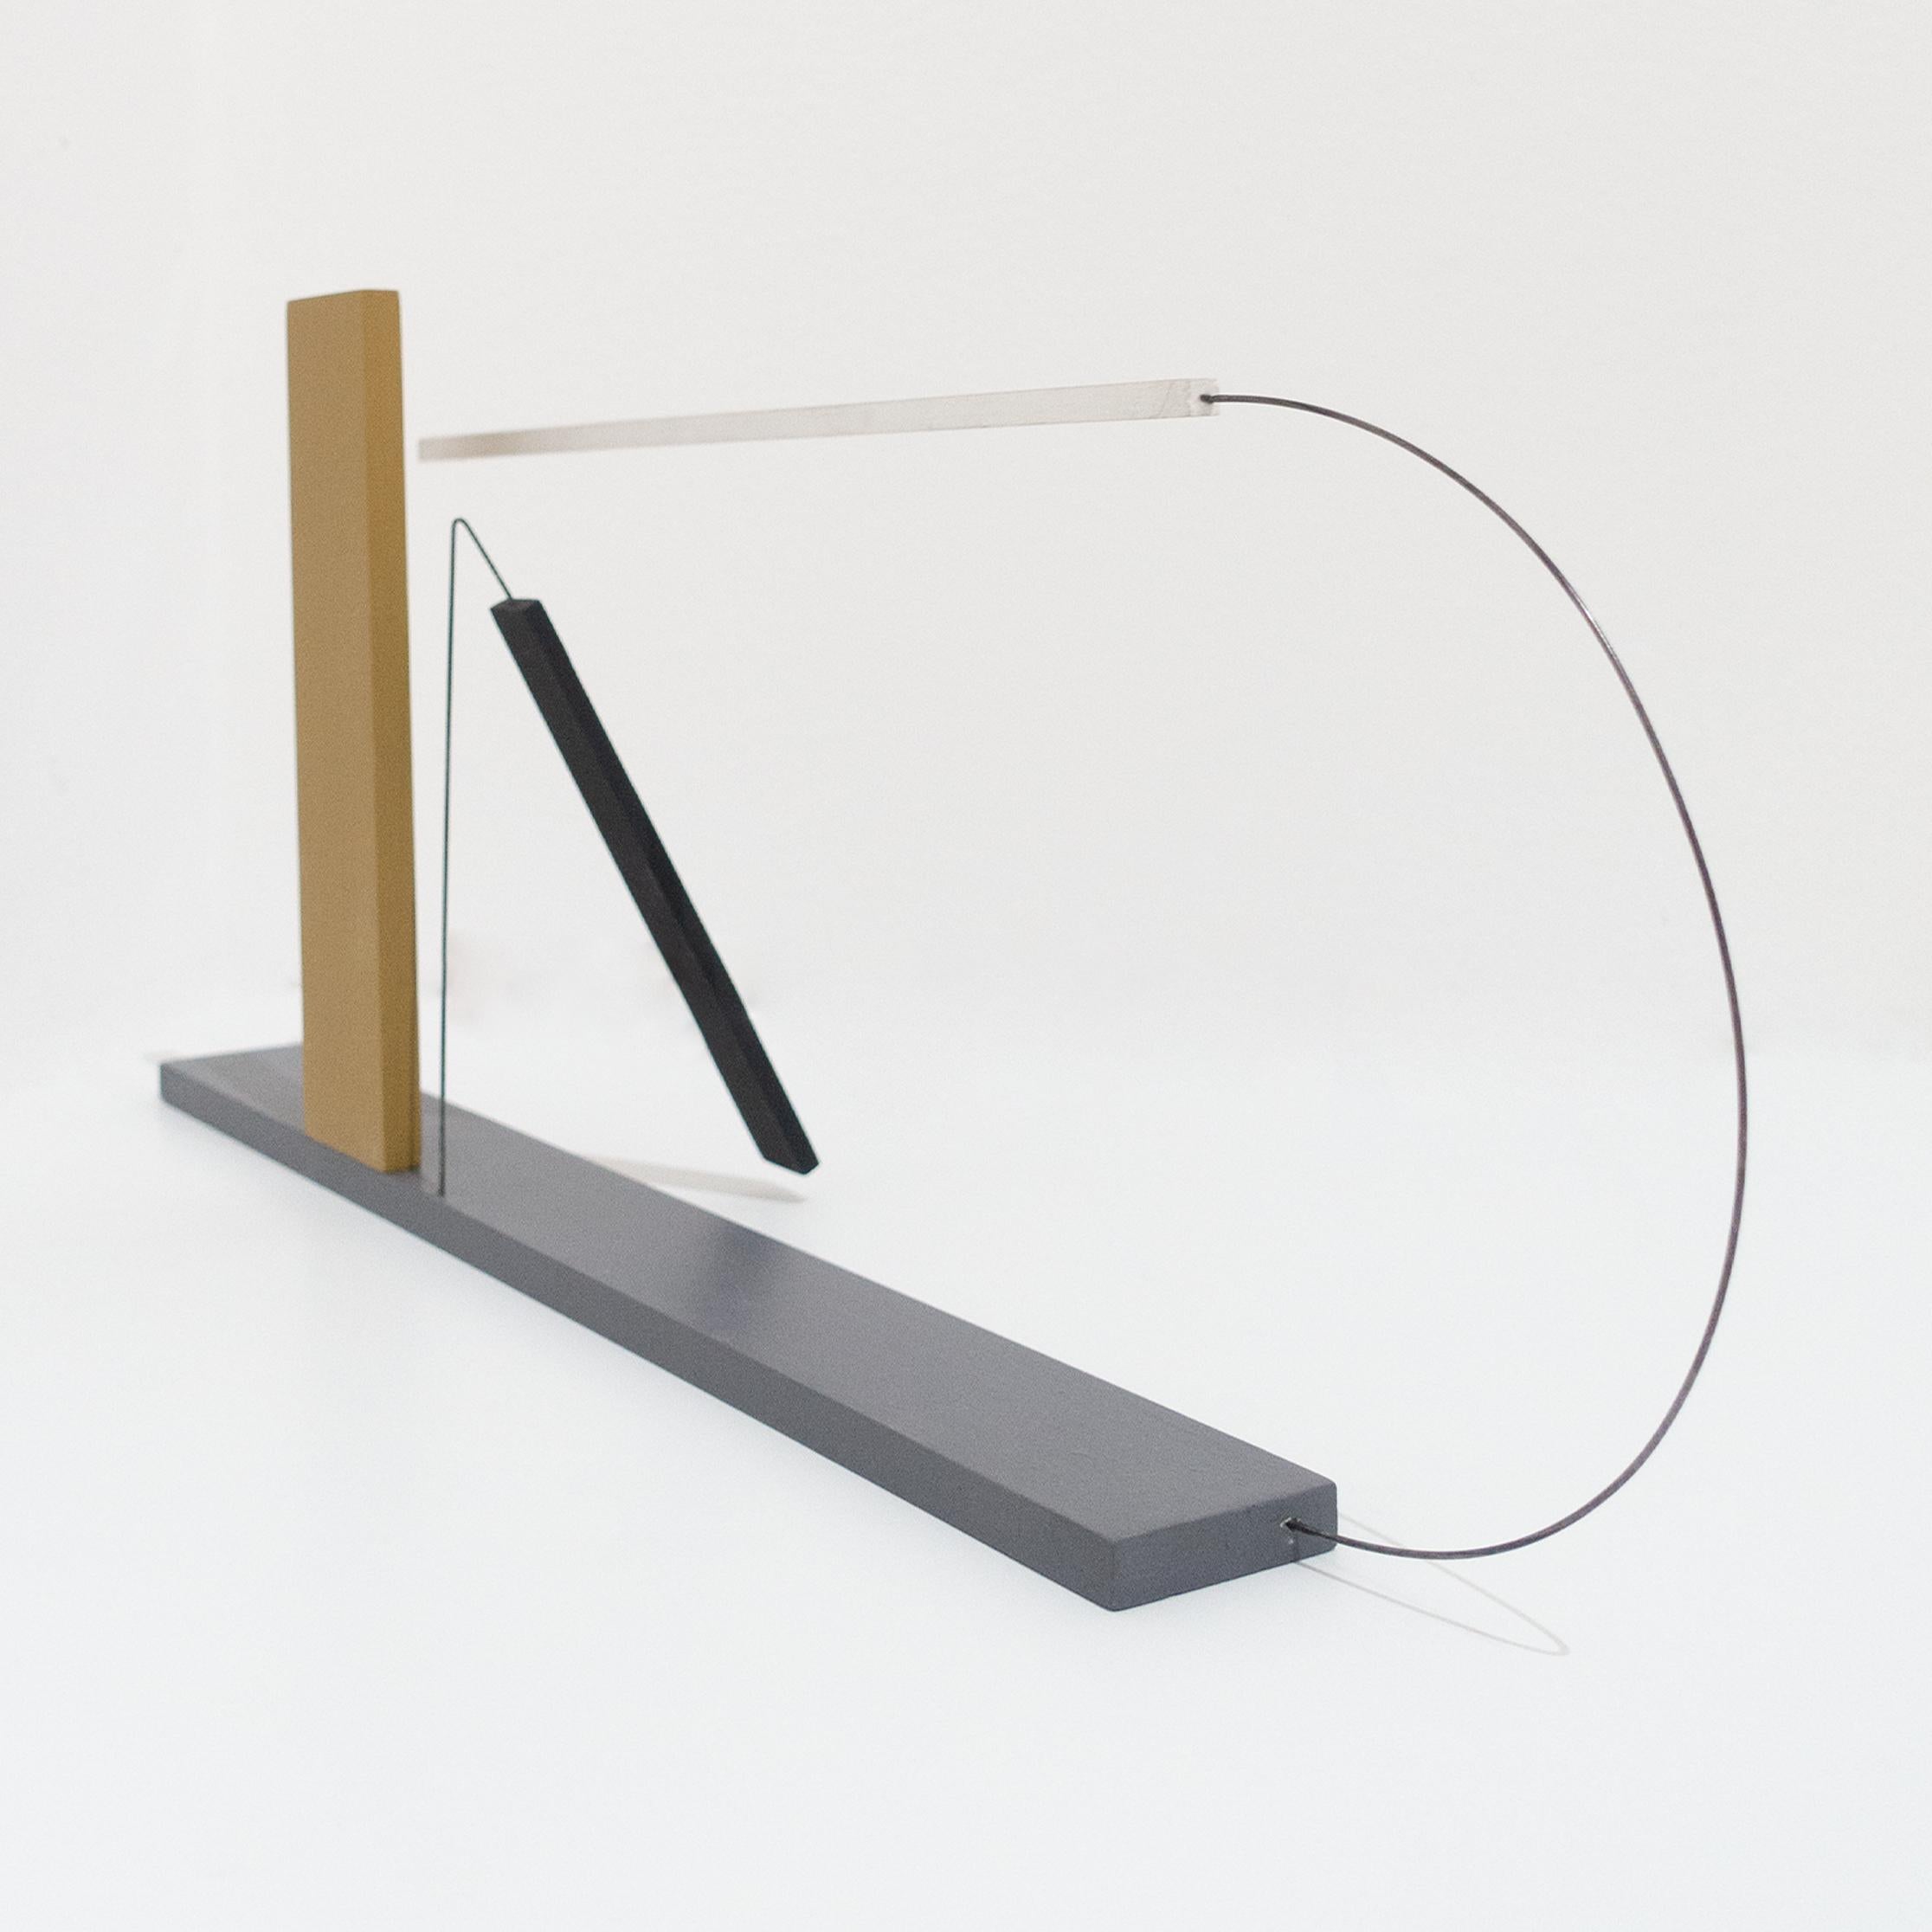 Bruno Munari Abstract Sculpture – Sensitiva, kinetische Skulptur, abstrakte Kunst, Holz, pastellfarbene Farben